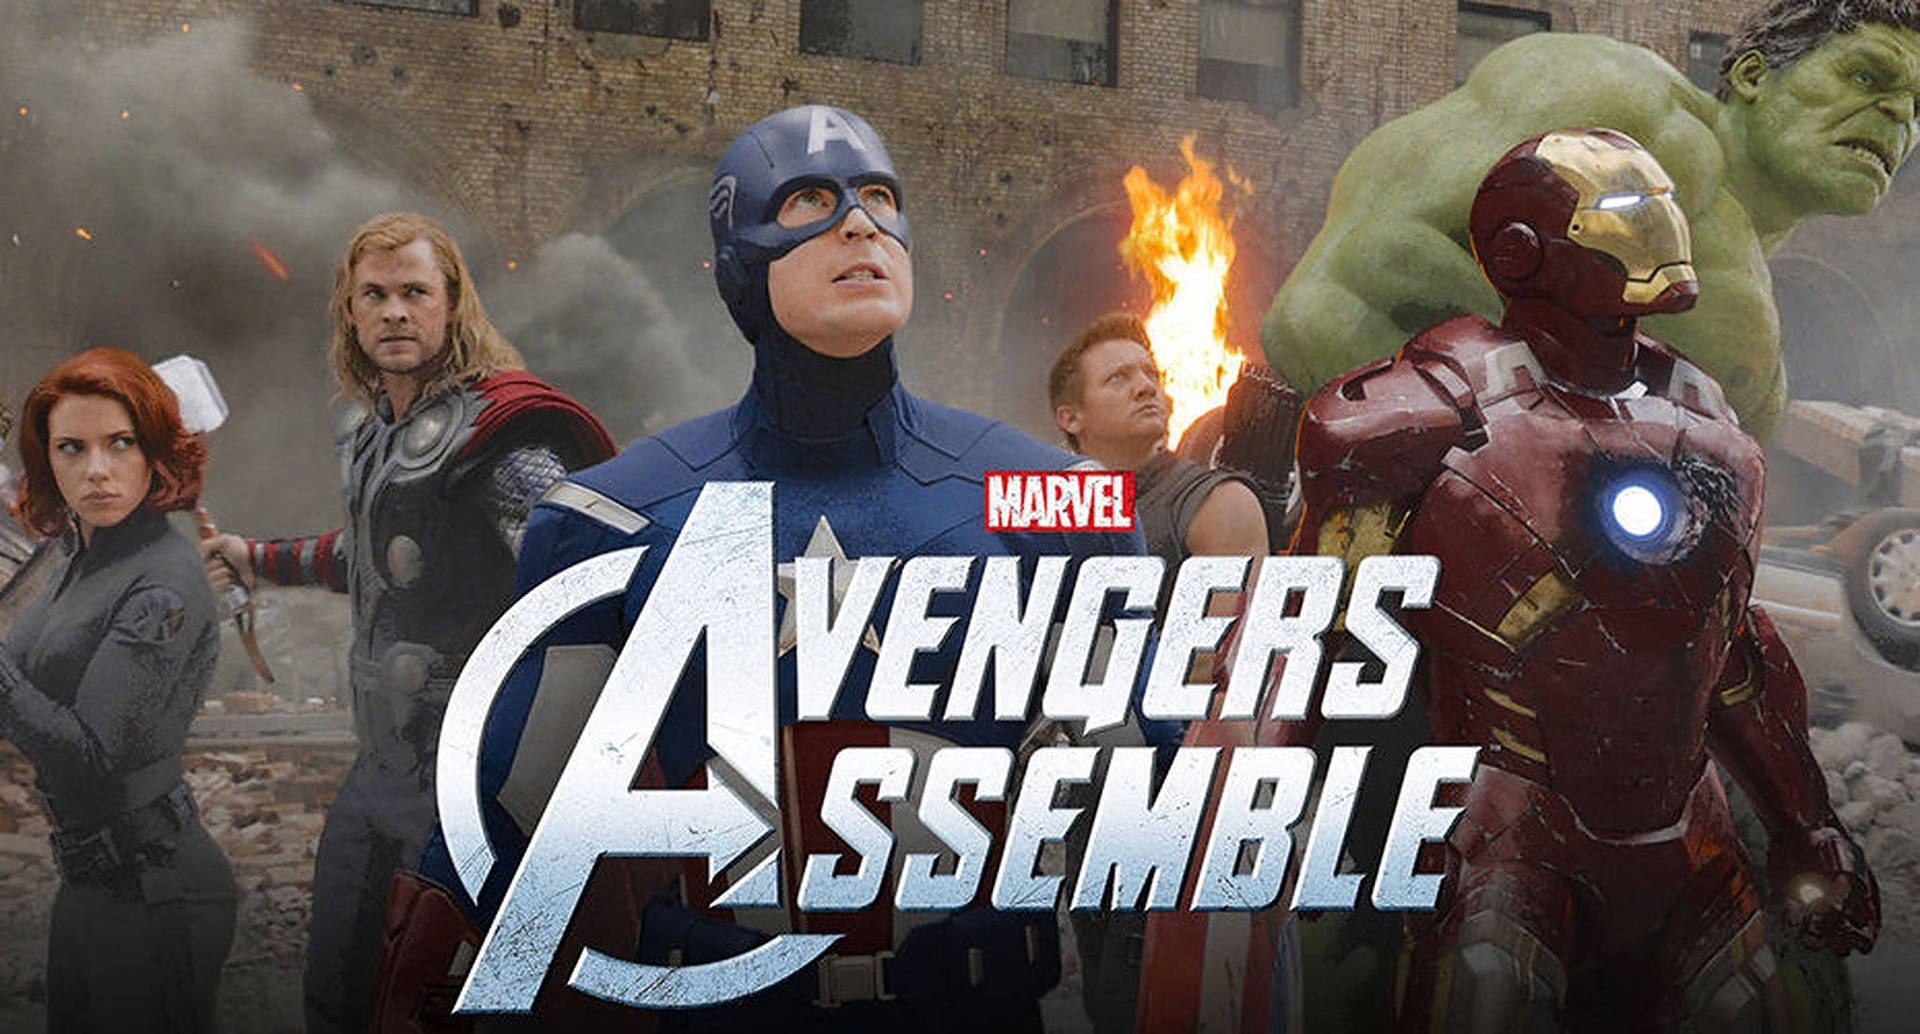 Free Avengers Assemble Wallpaper Downloads, [100+] Avengers Assemble  Wallpapers for FREE 